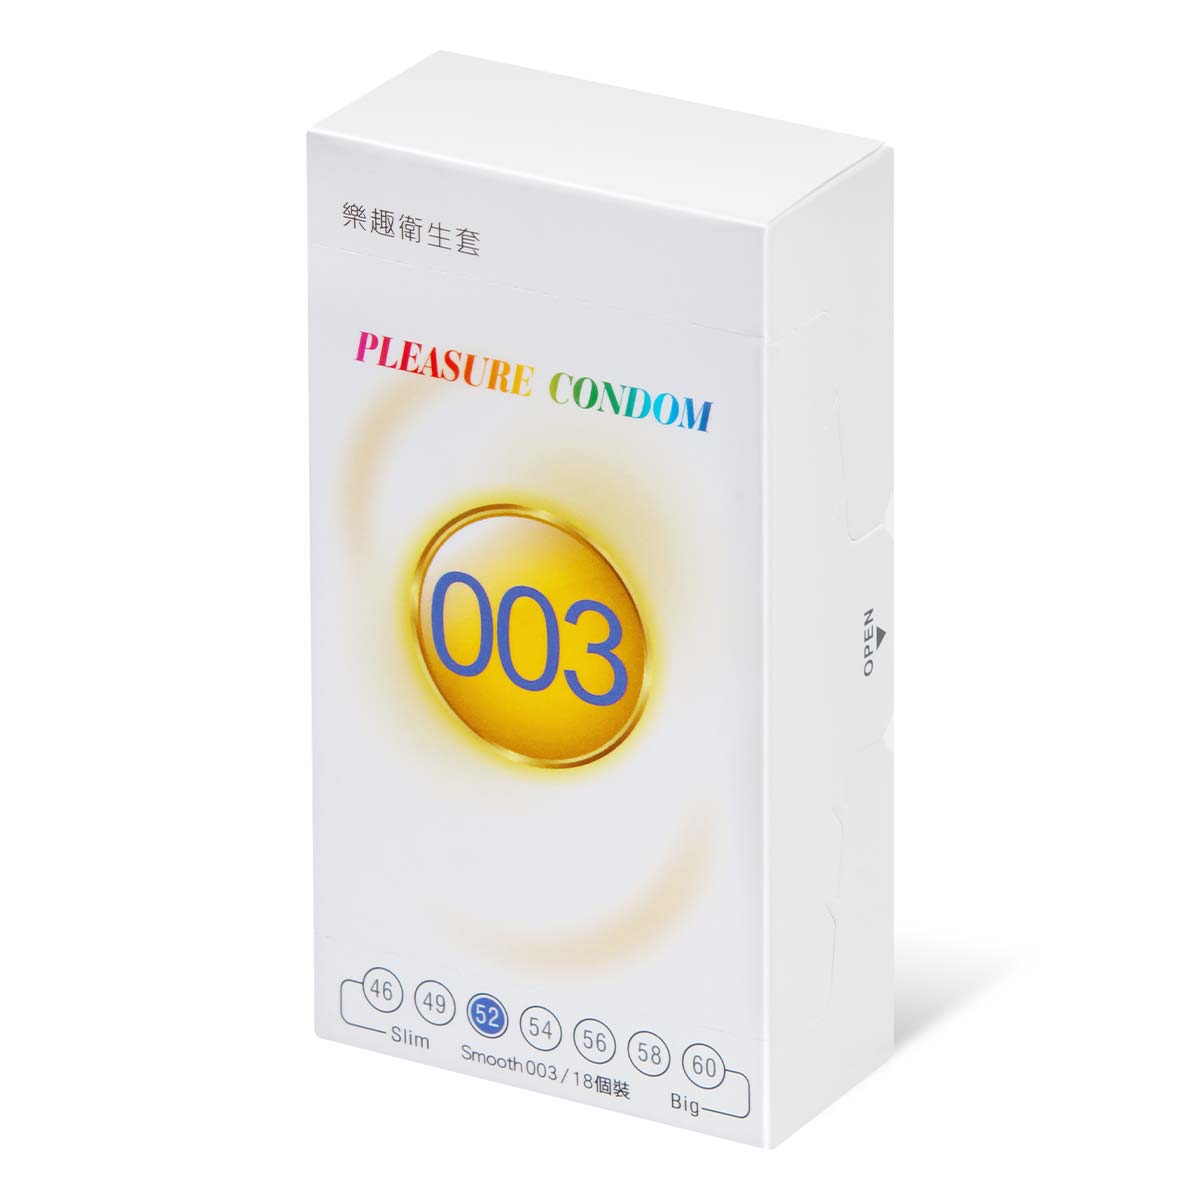 Pleasure Condom 003 18's Pack Latex Condom-thumb_1